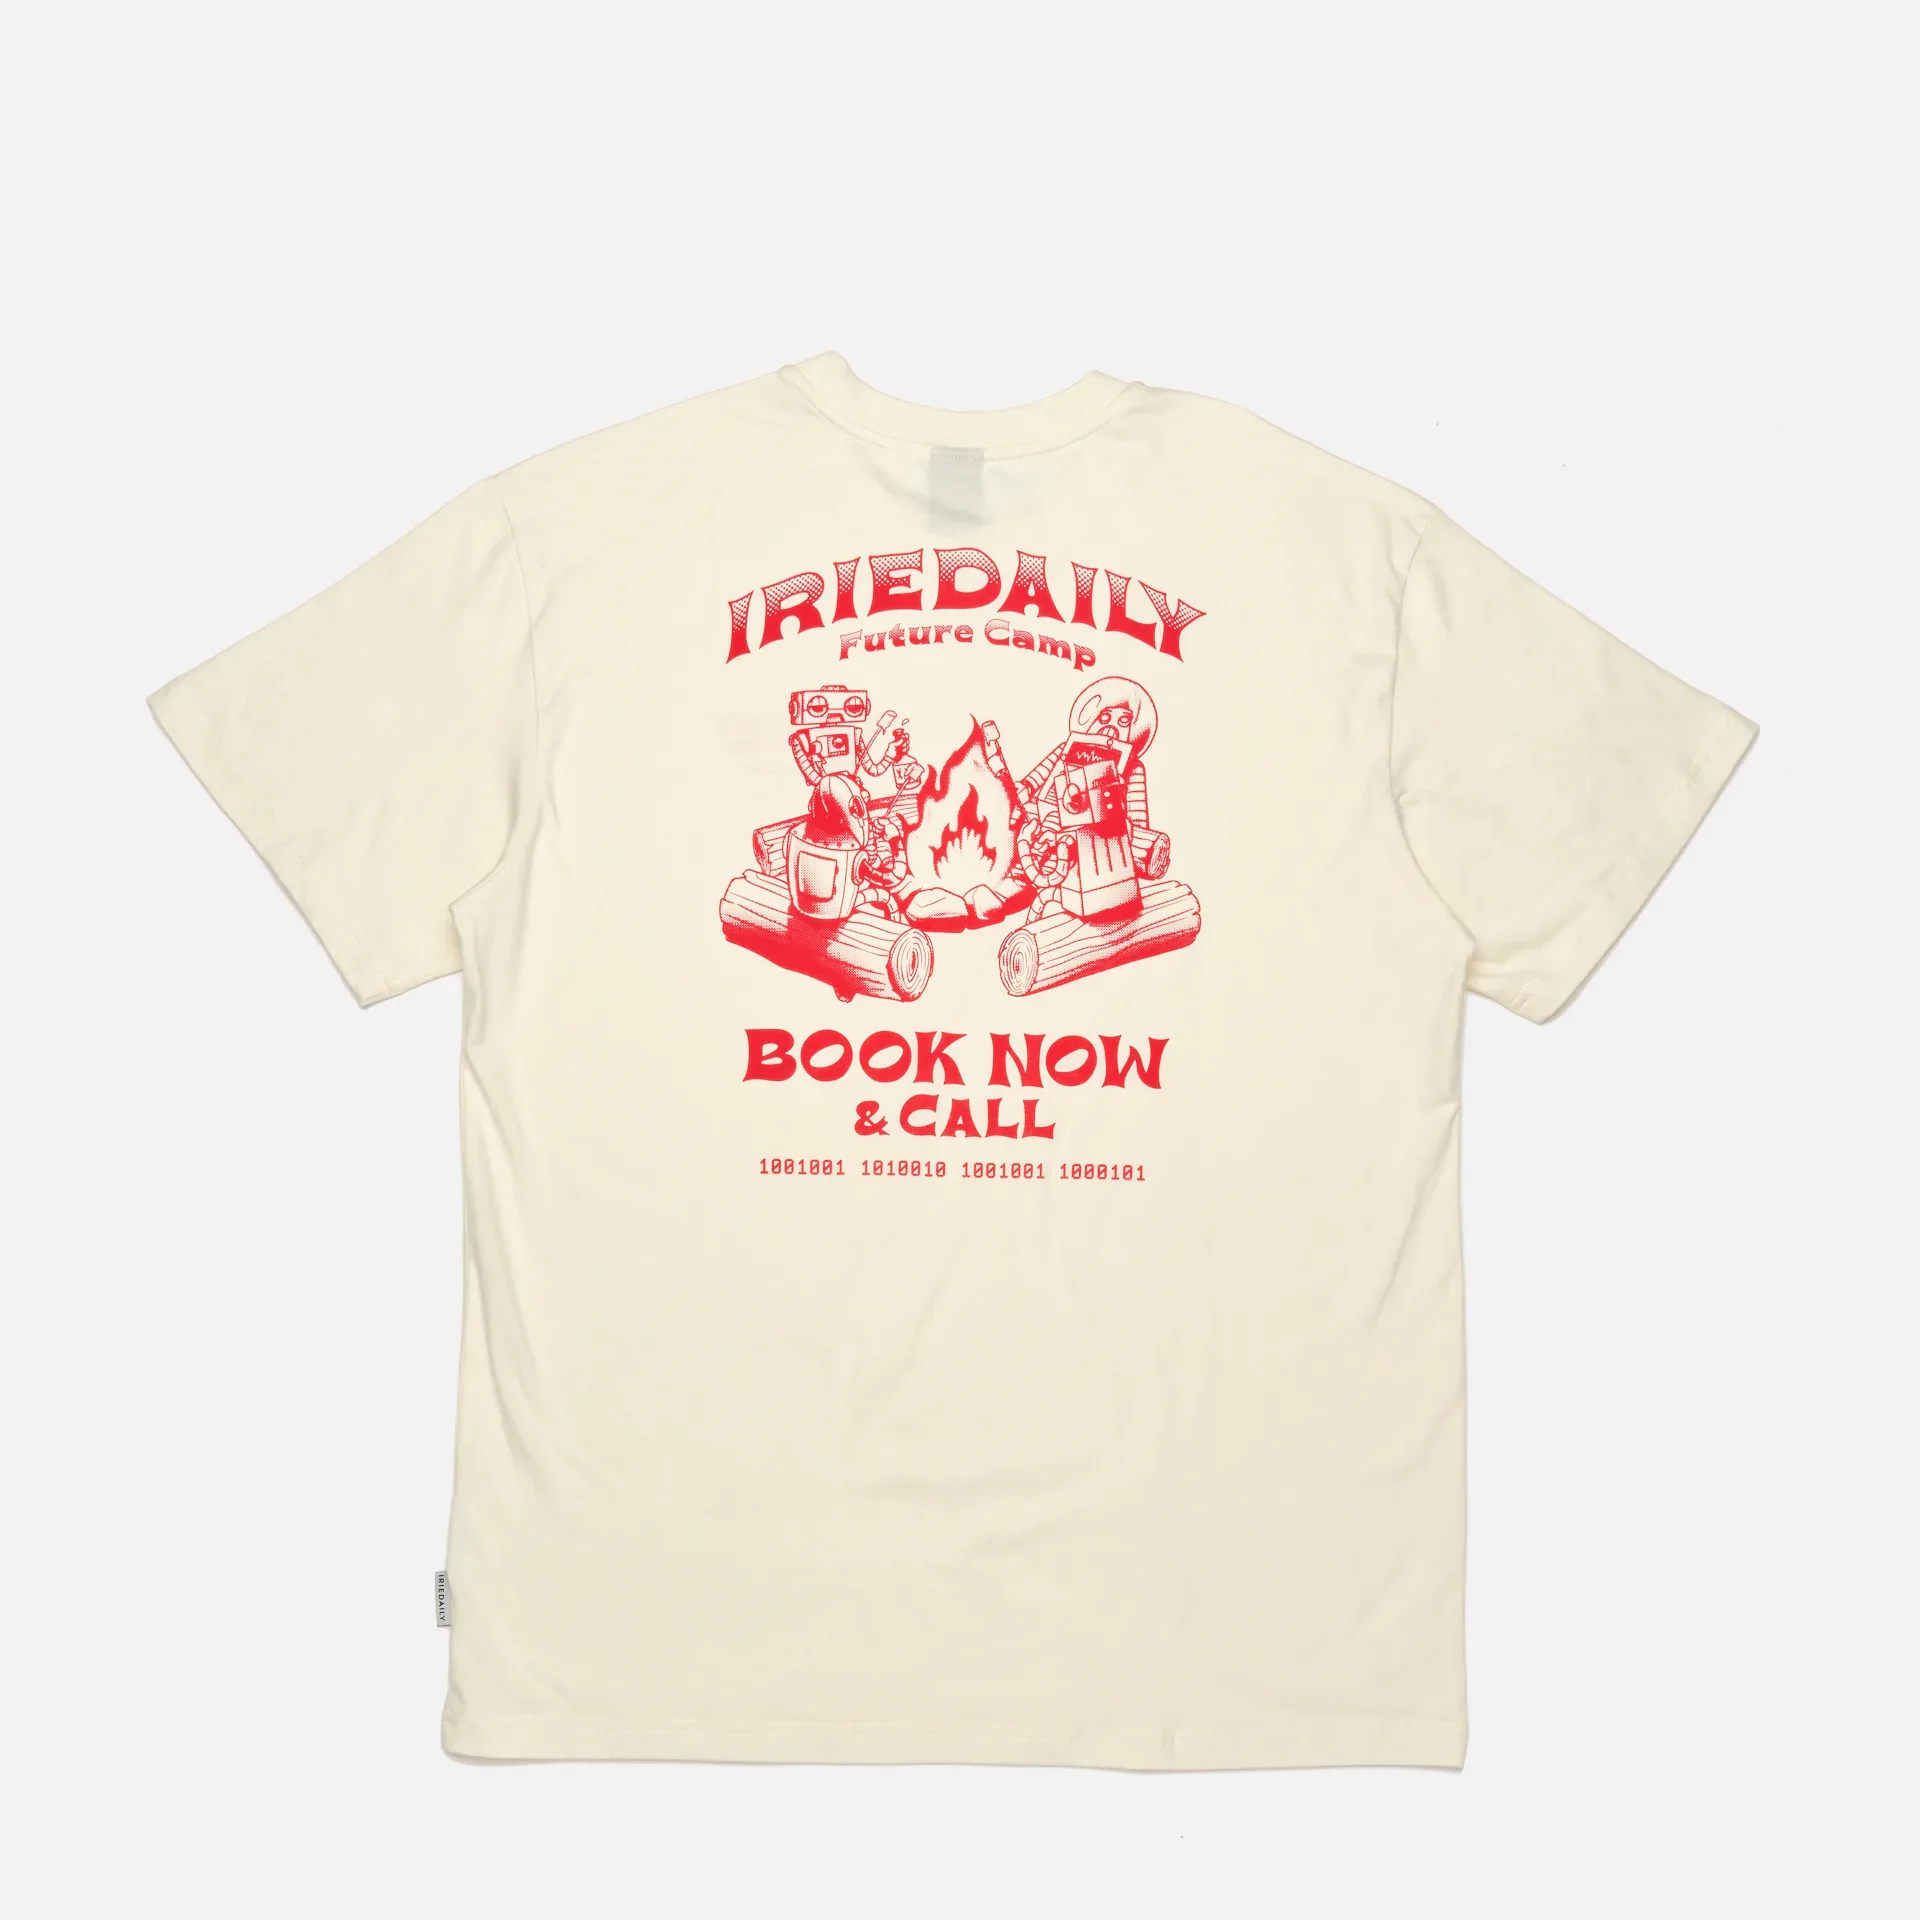 Iriedaily Future Camp T-Shirt Off White